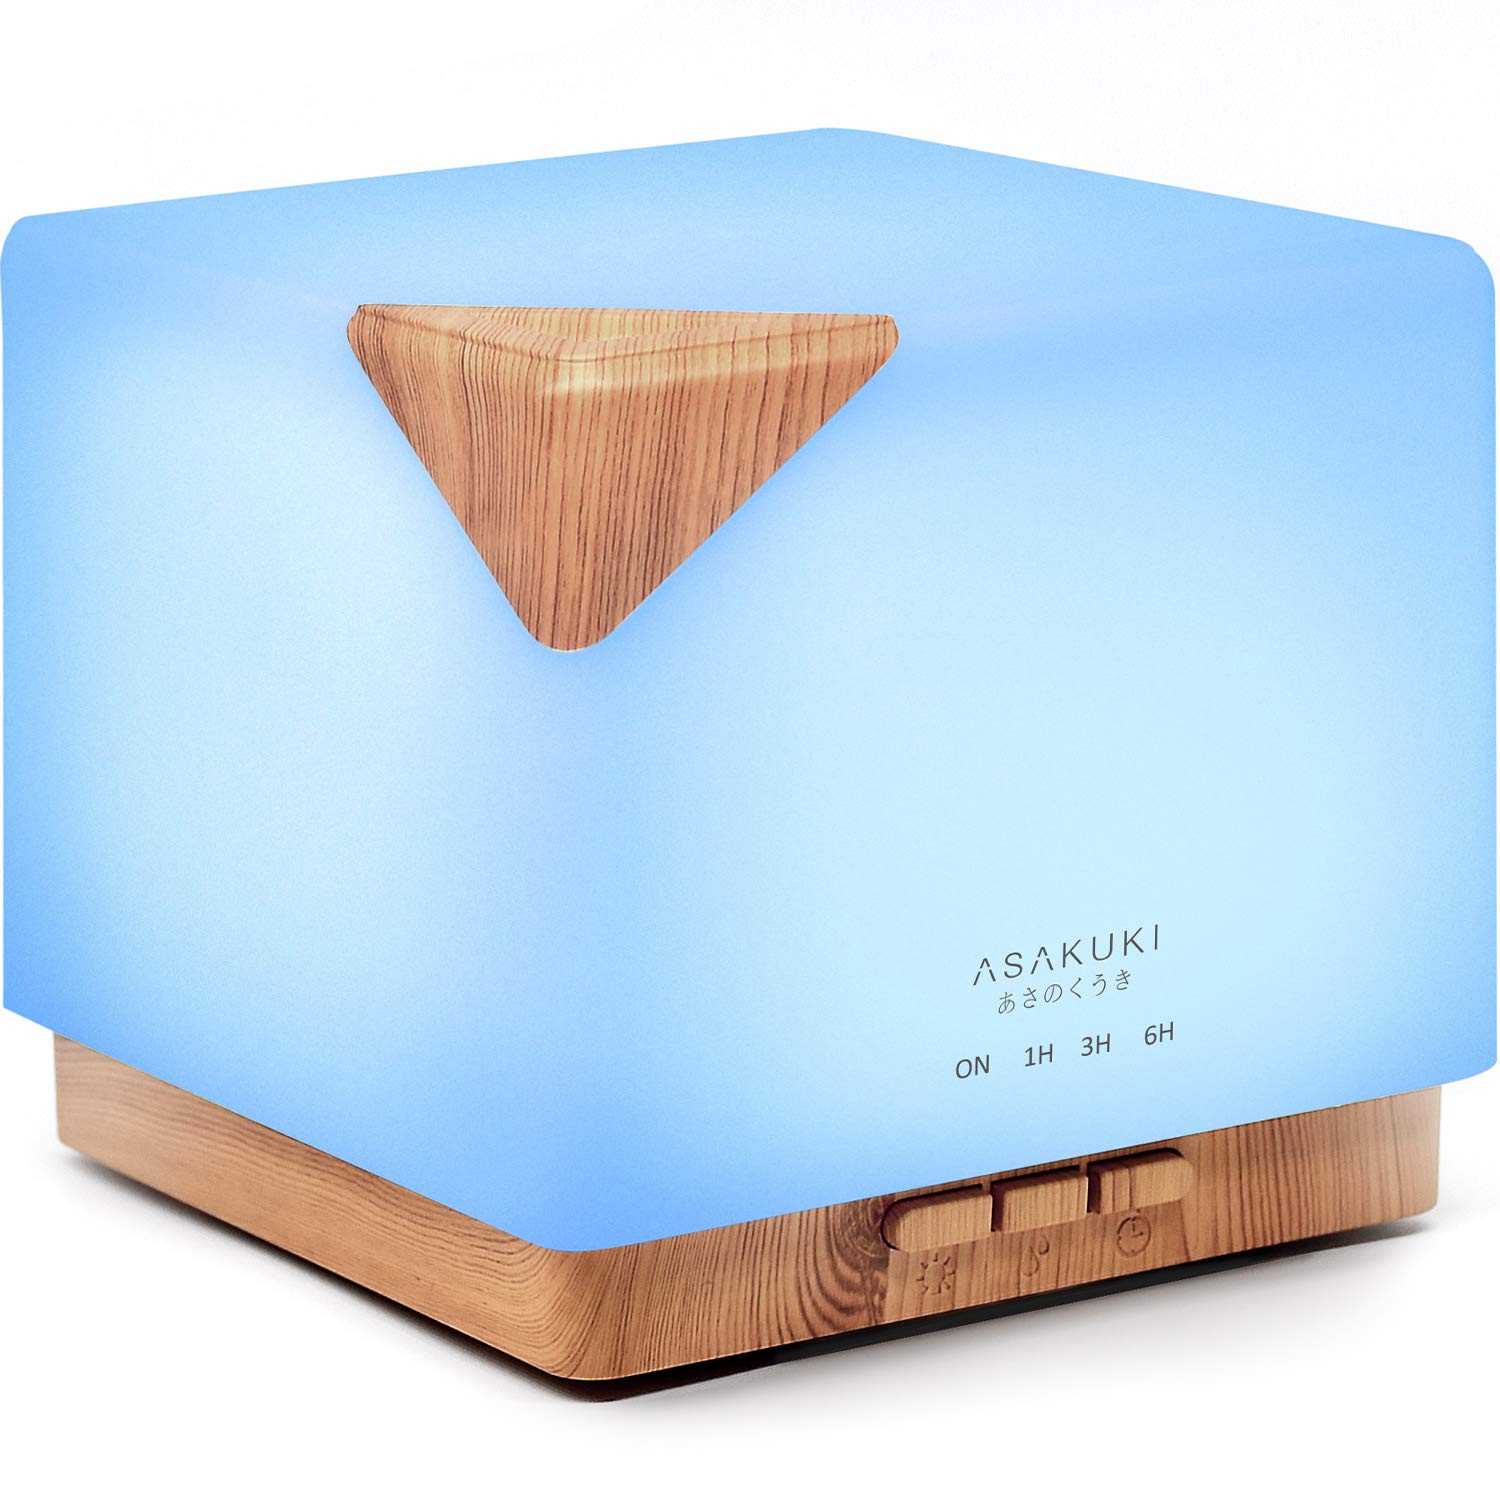 ASAKUKI 700ml 5-In-1 Ultrasonic Aromatherapy Essential Oil Diffuser & Humidifier, Light Wood